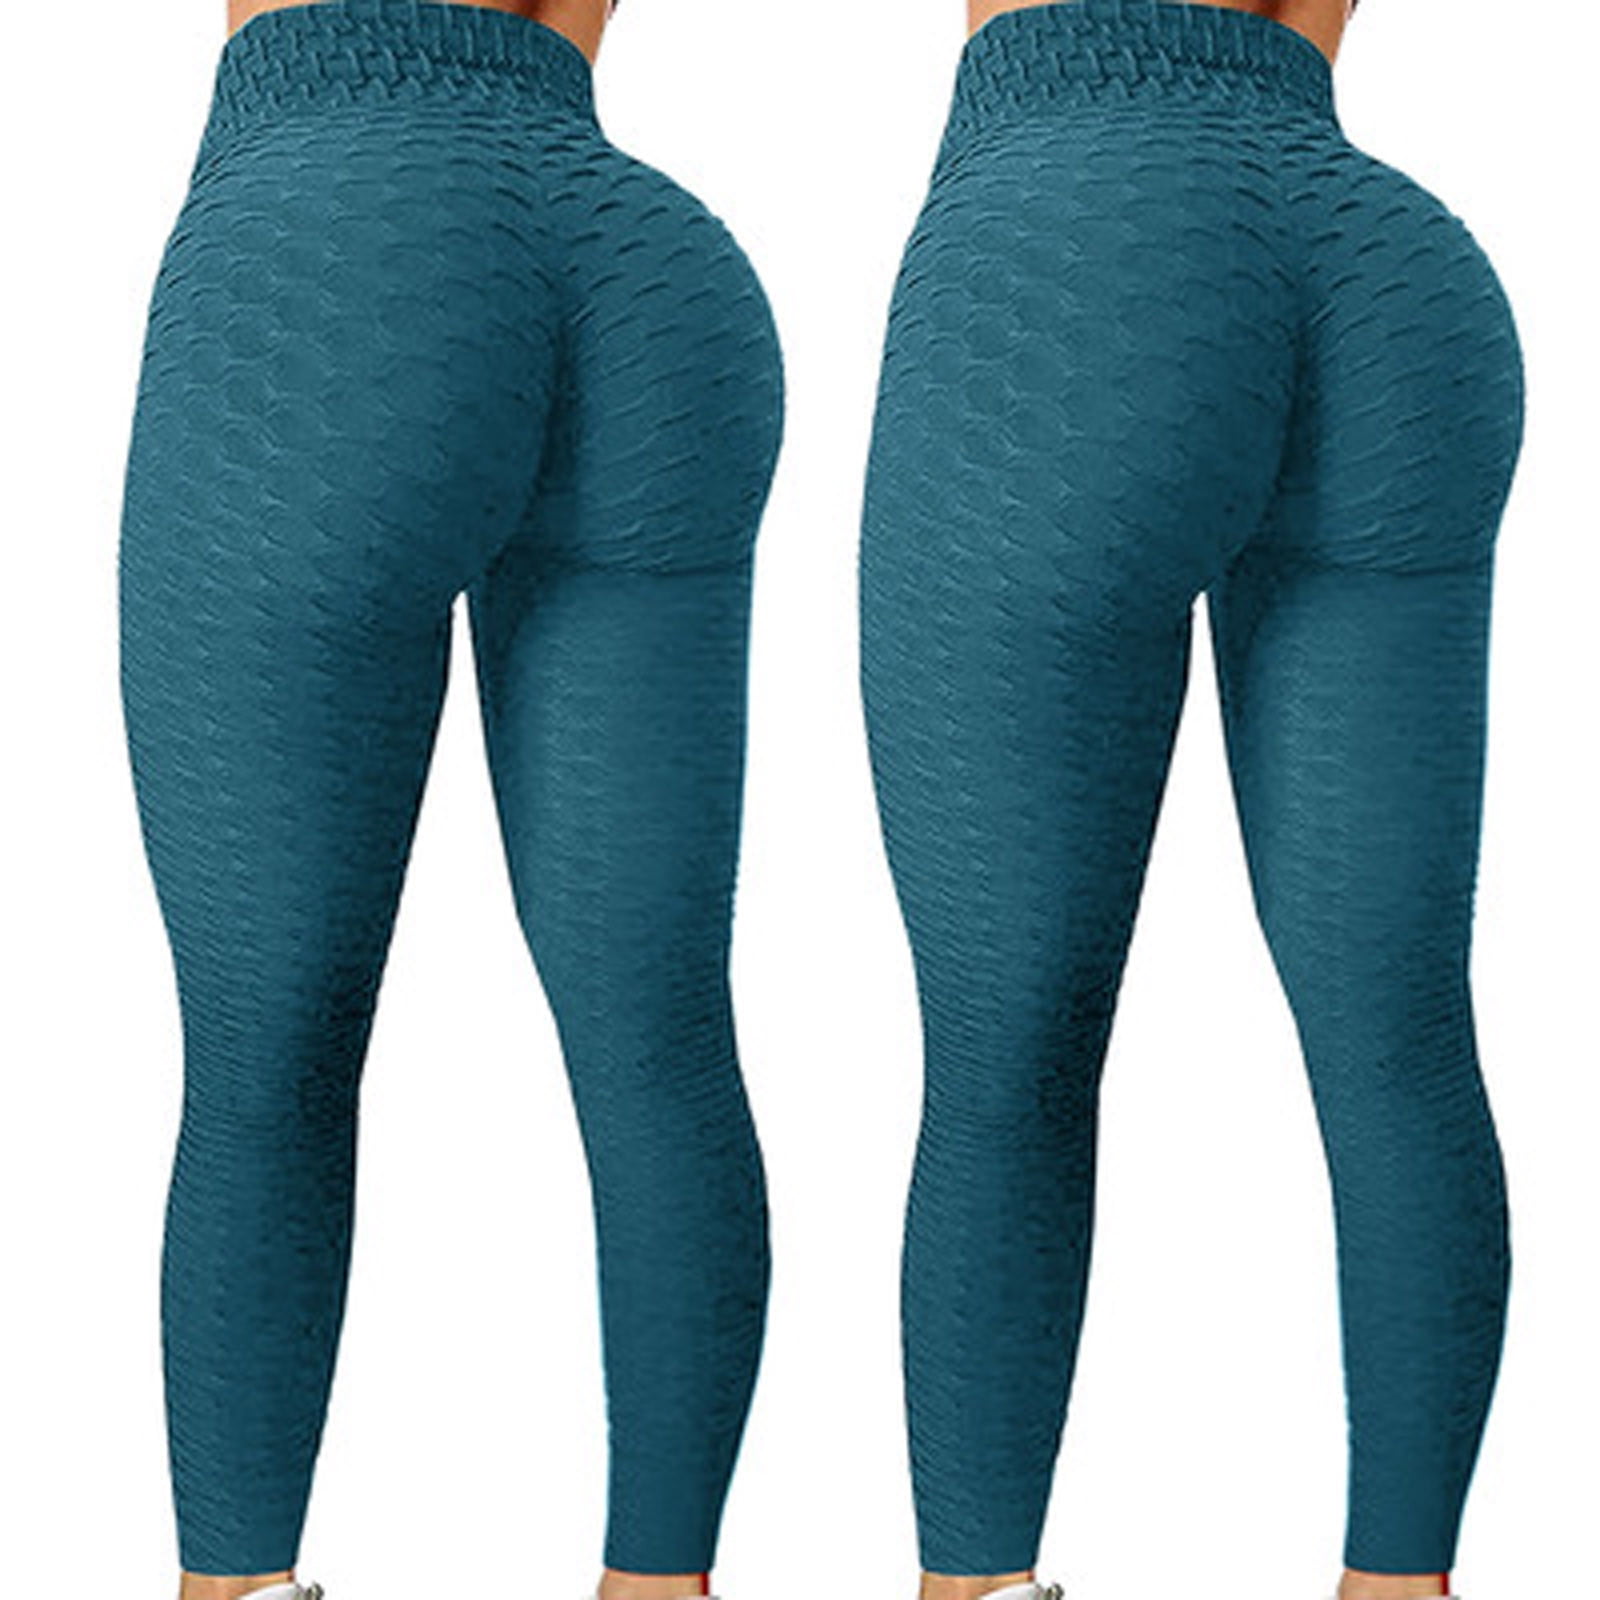 Samickarr plus size leggings for women Stretchy tummy control Butt